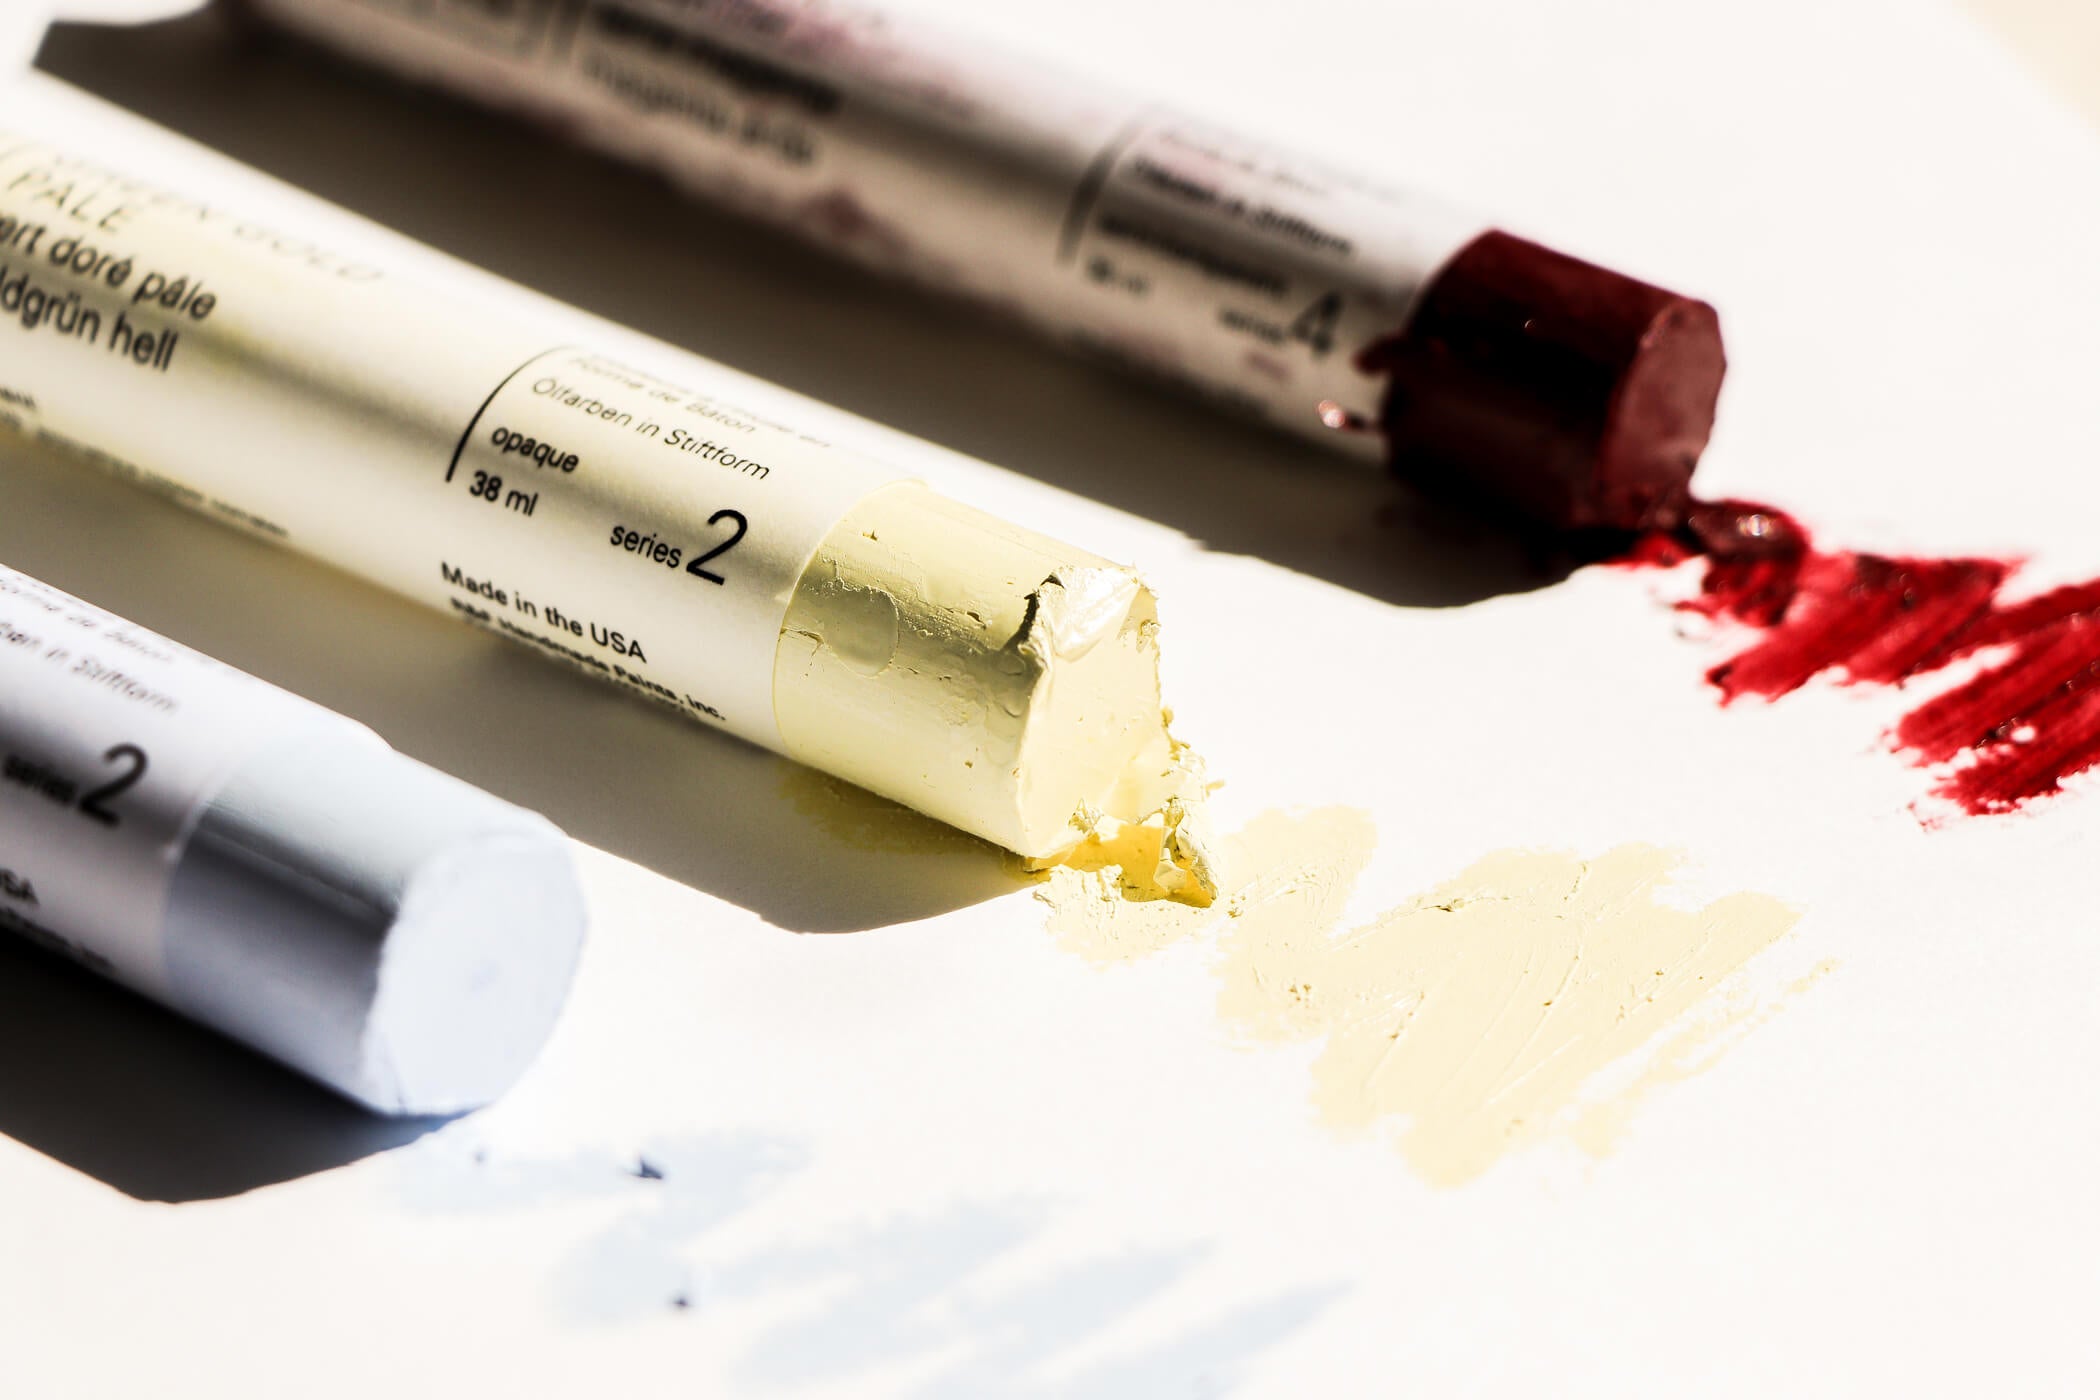 Ask Richard: Pigment Sticks — R&F Handmade Paints